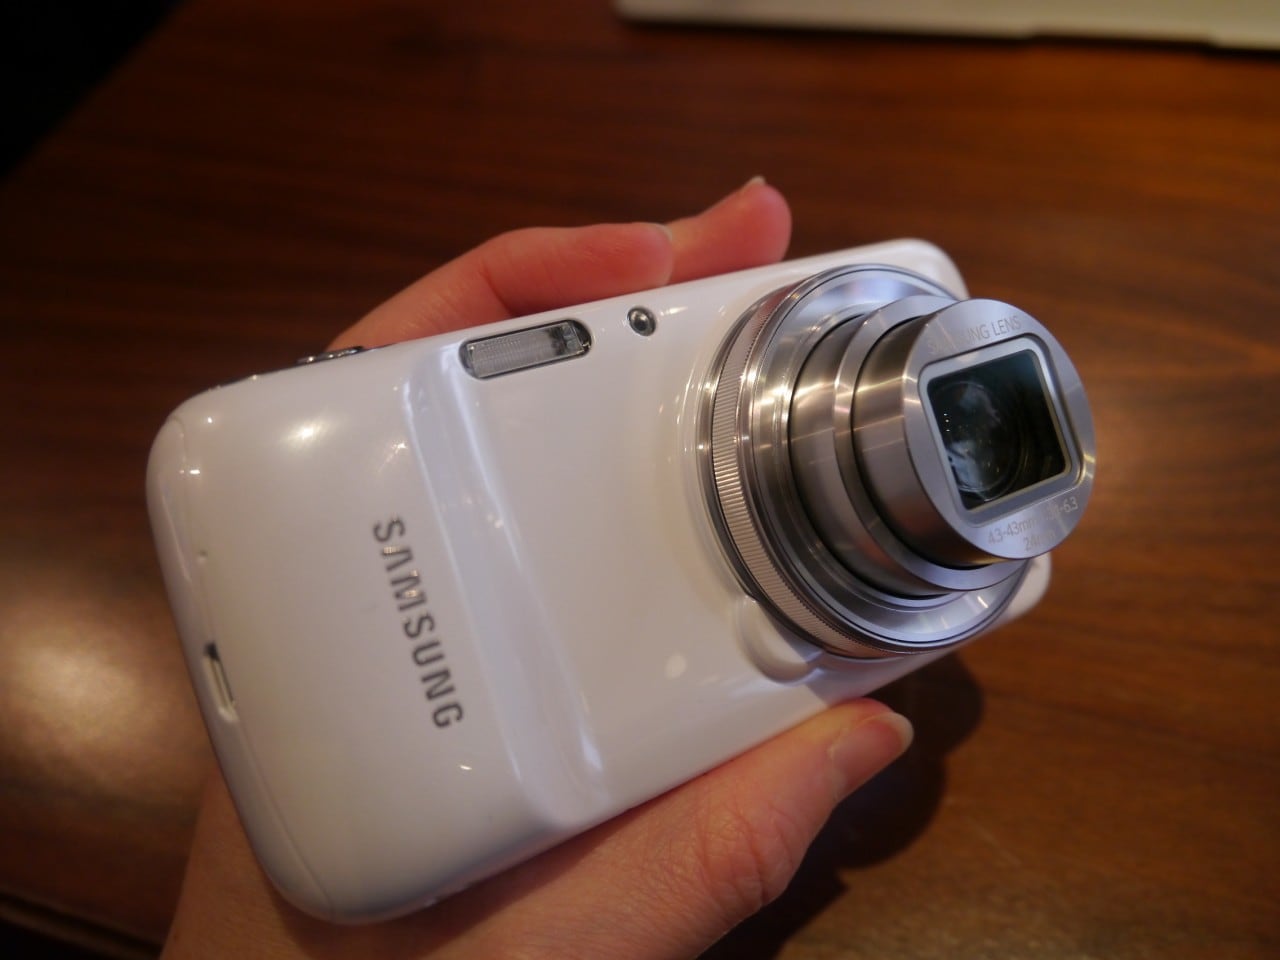 Samsung Galaxy S4 Zoom: hands-on